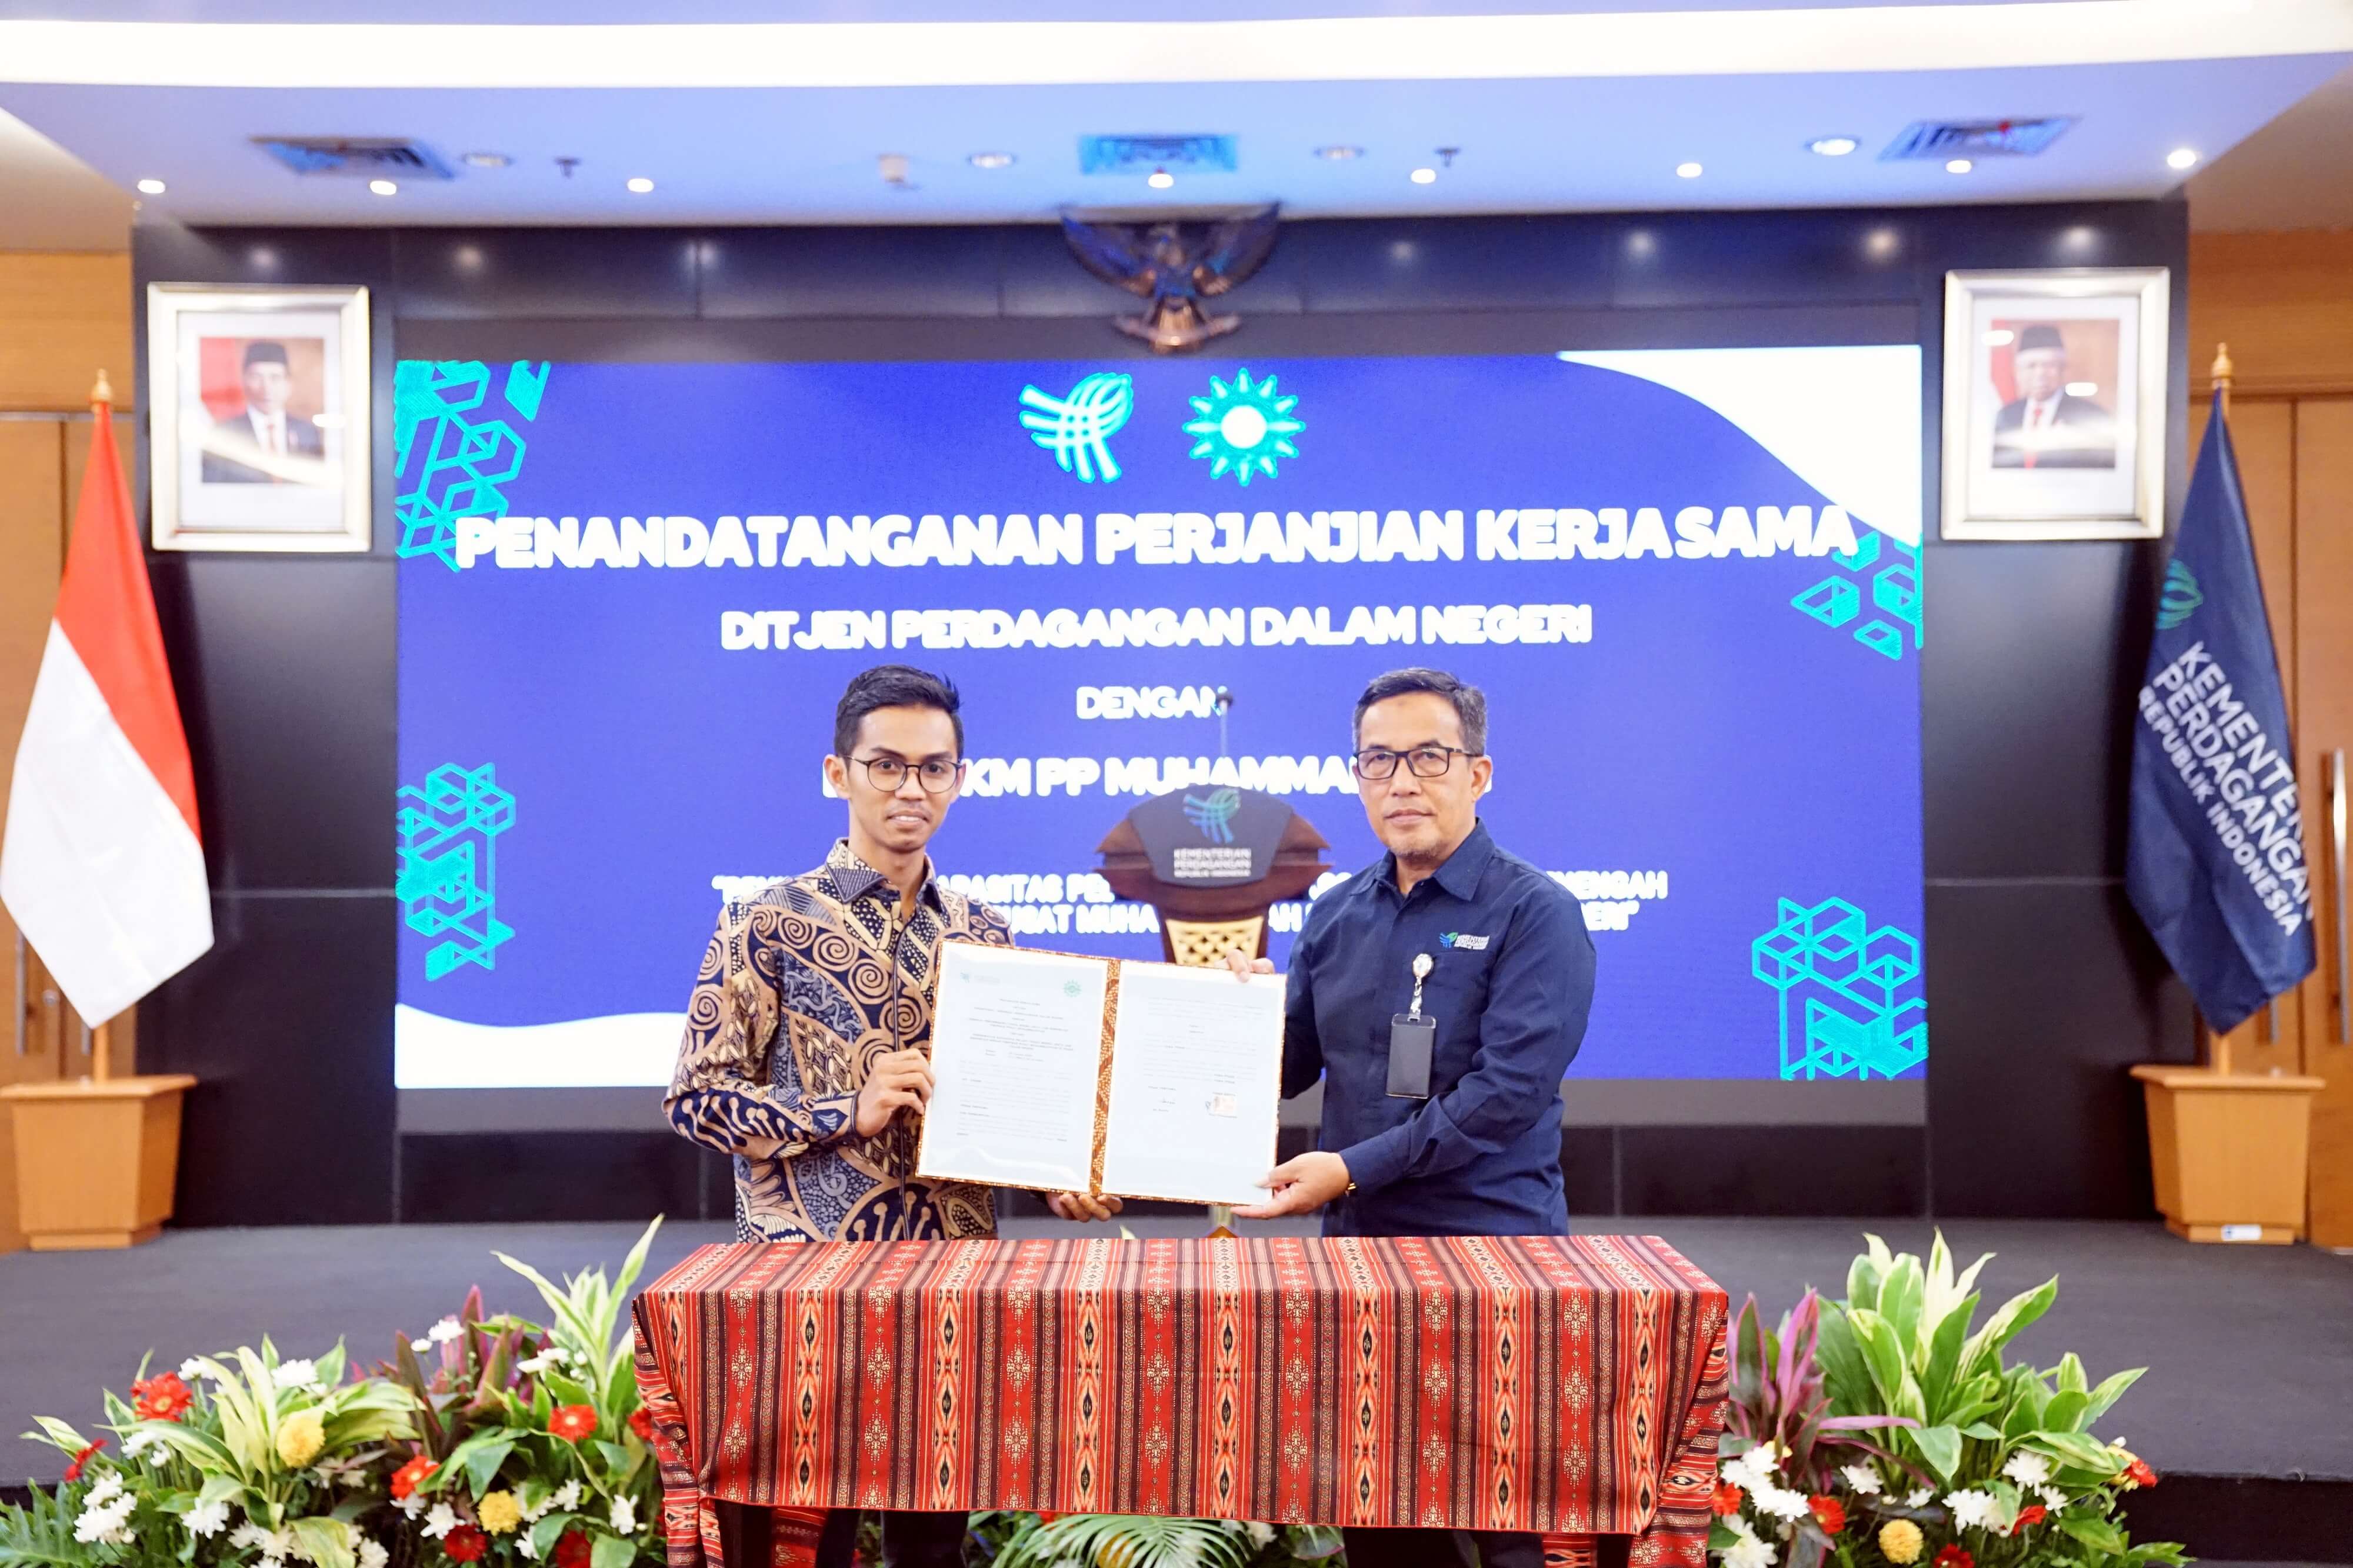 Dirjen PDN Menandatangi Perjanjian Kerja Sama dengan Lembaga Pengembang UMKM Pimpinan Pusat Muhammadiyah